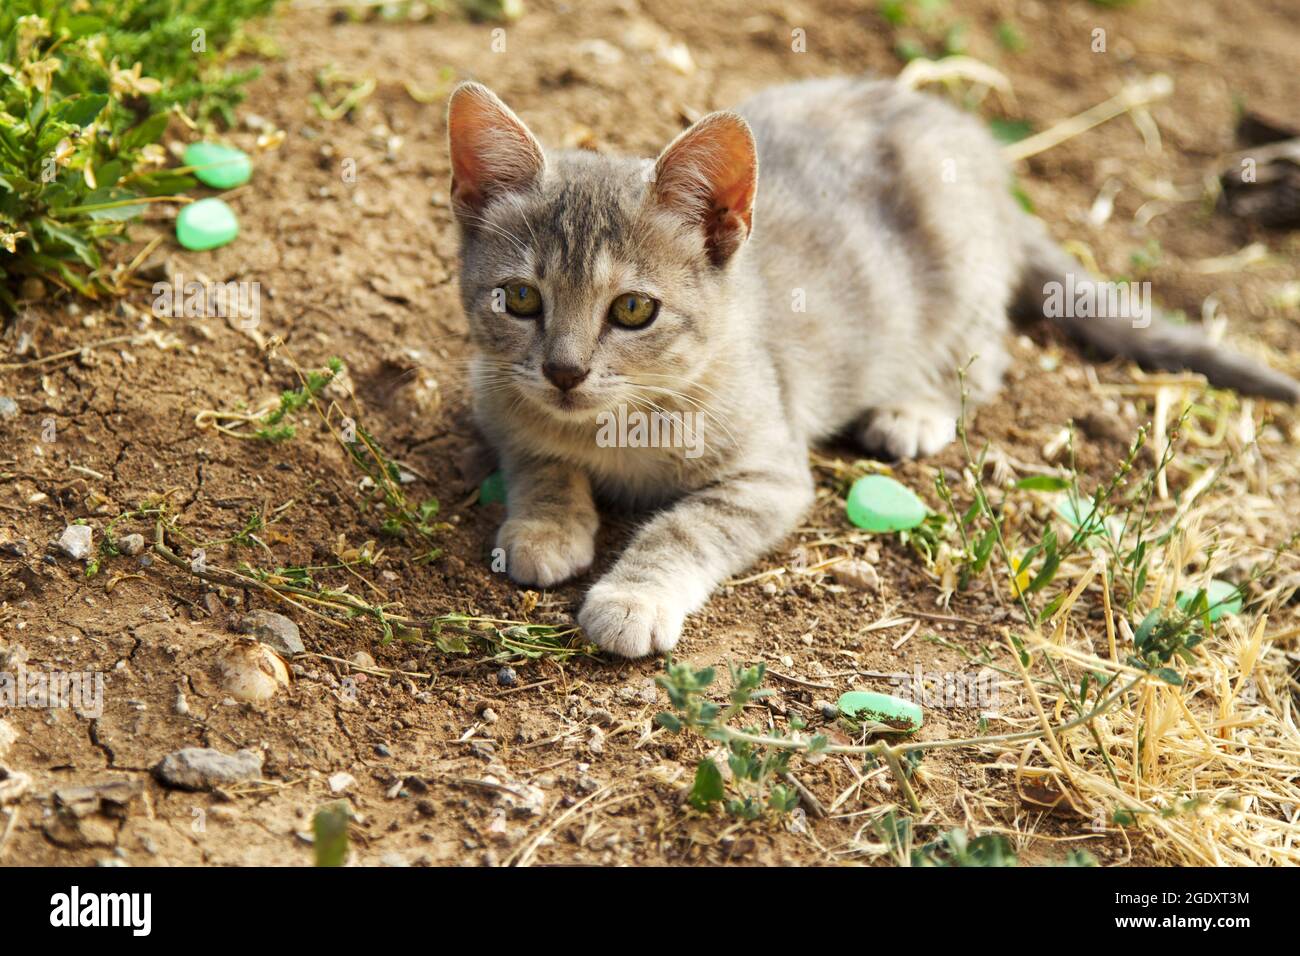 Cute baby cat in the garden Stock Photo